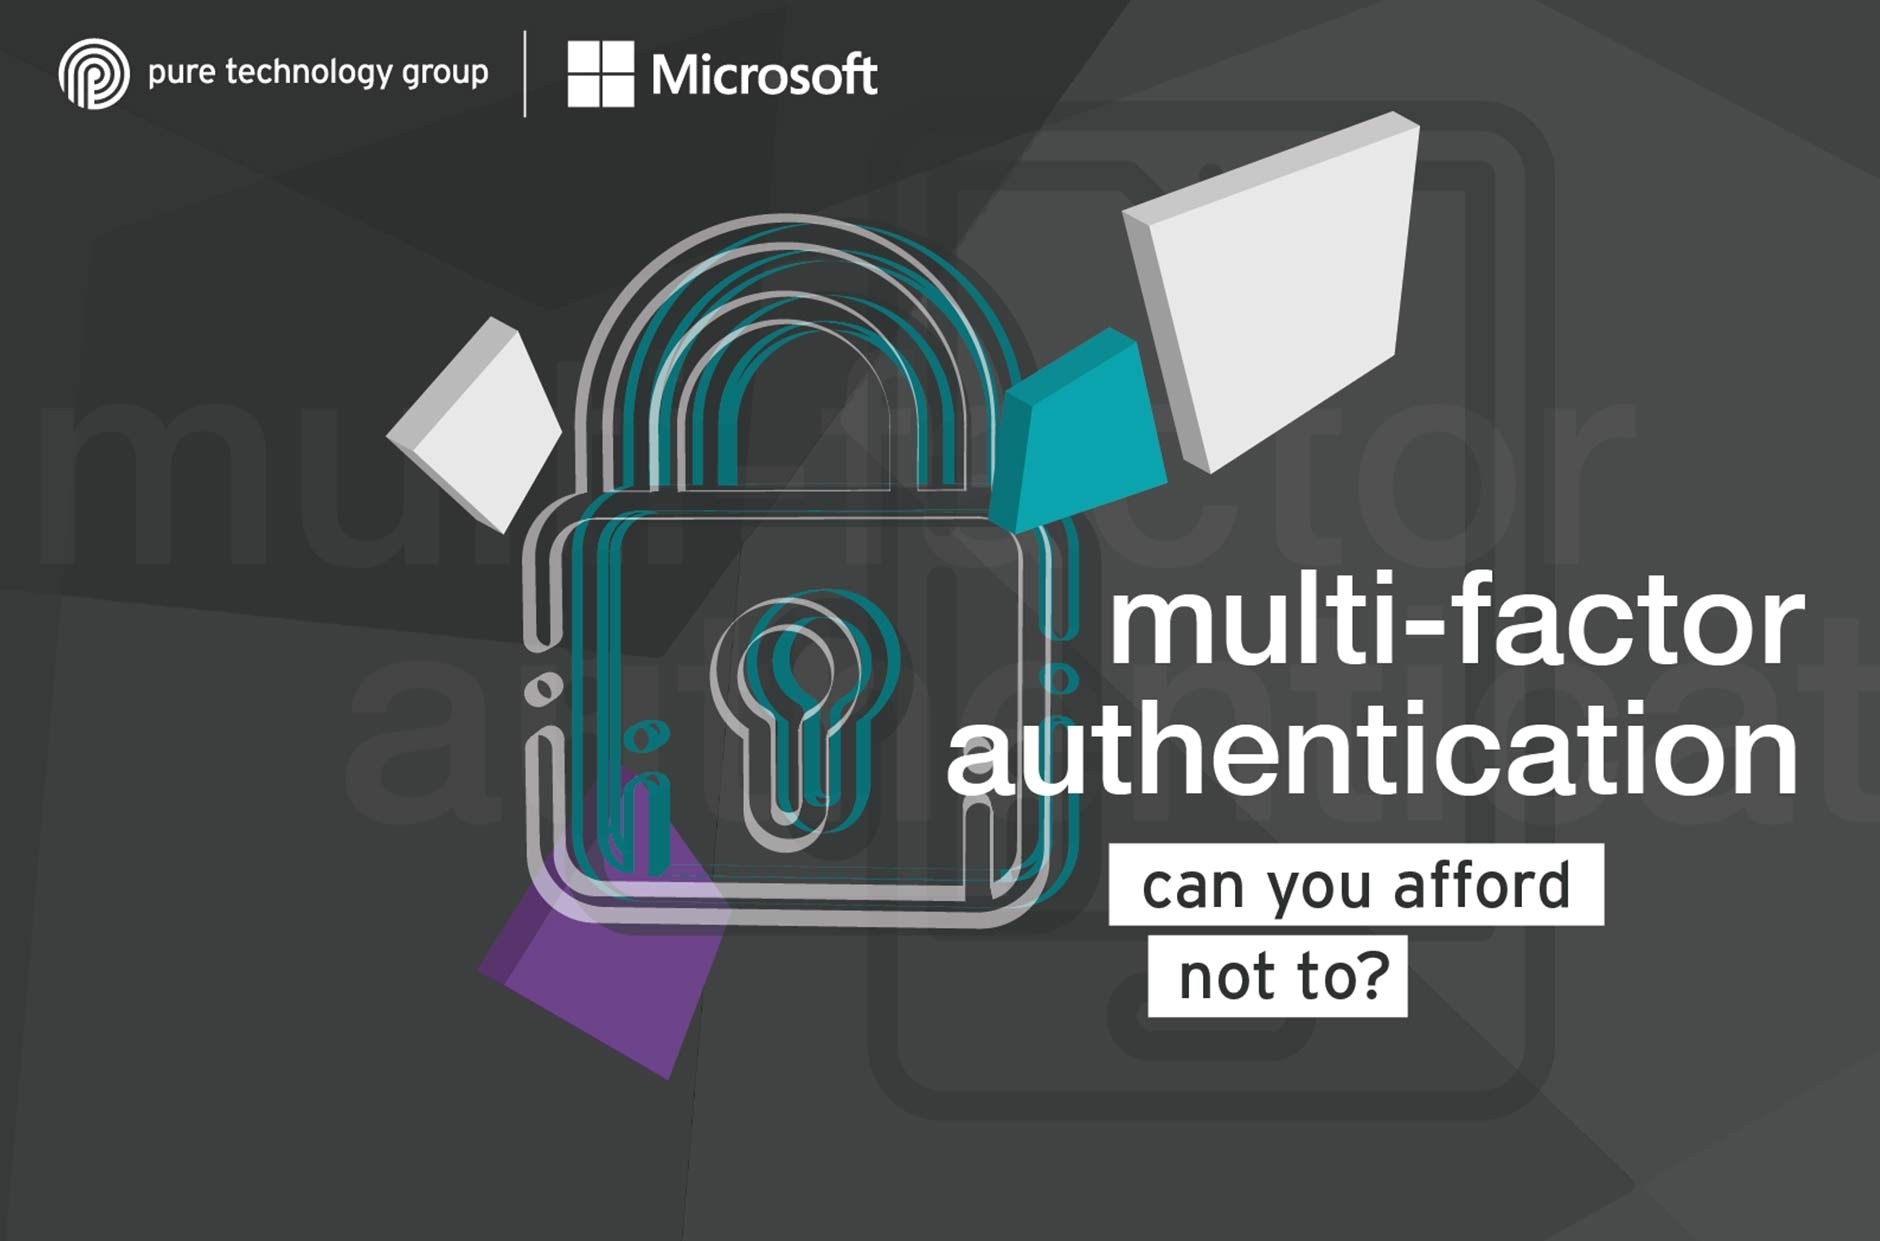 mfa authentication app